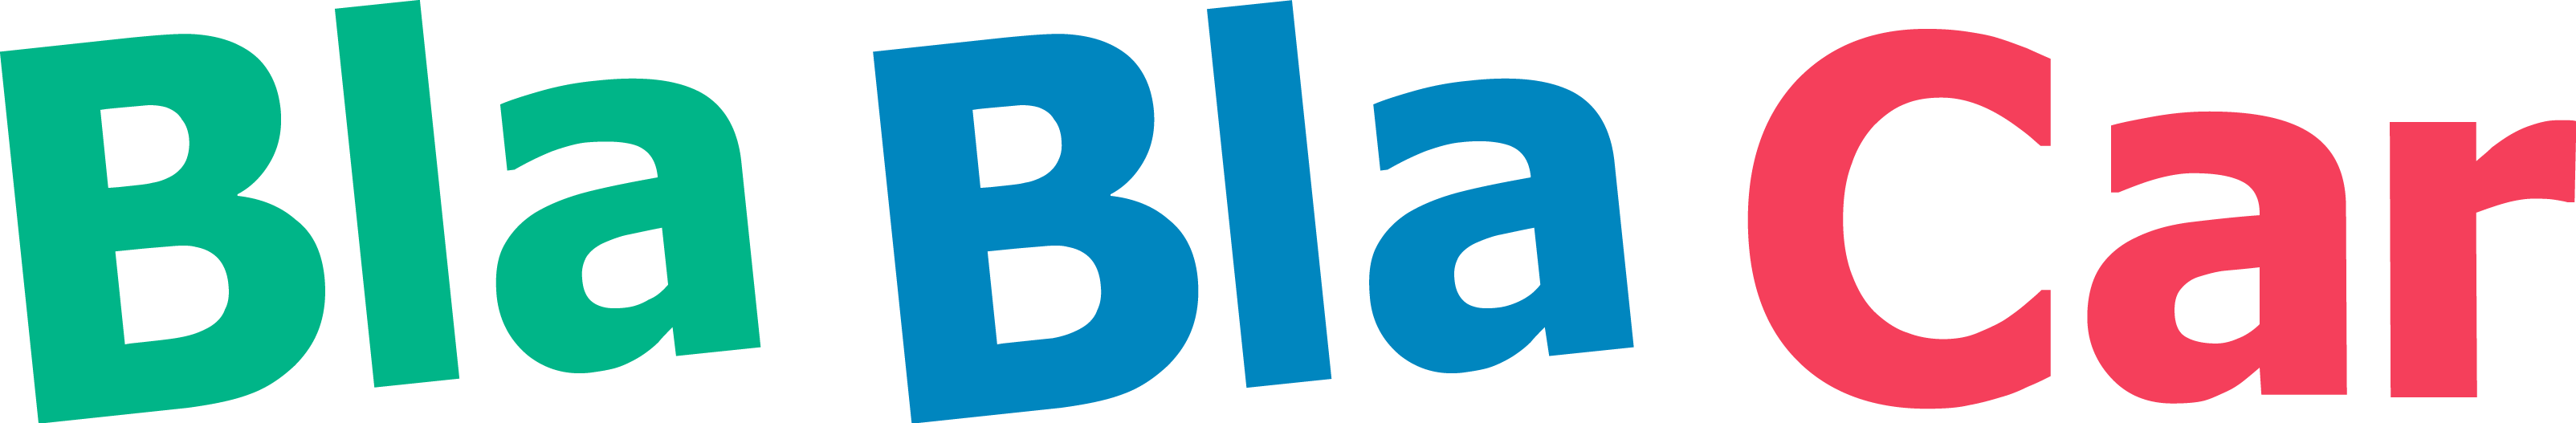 BlaBlaCar Logo - BlaBlaCar Competitors, Revenue and Employees - Owler Company Profile